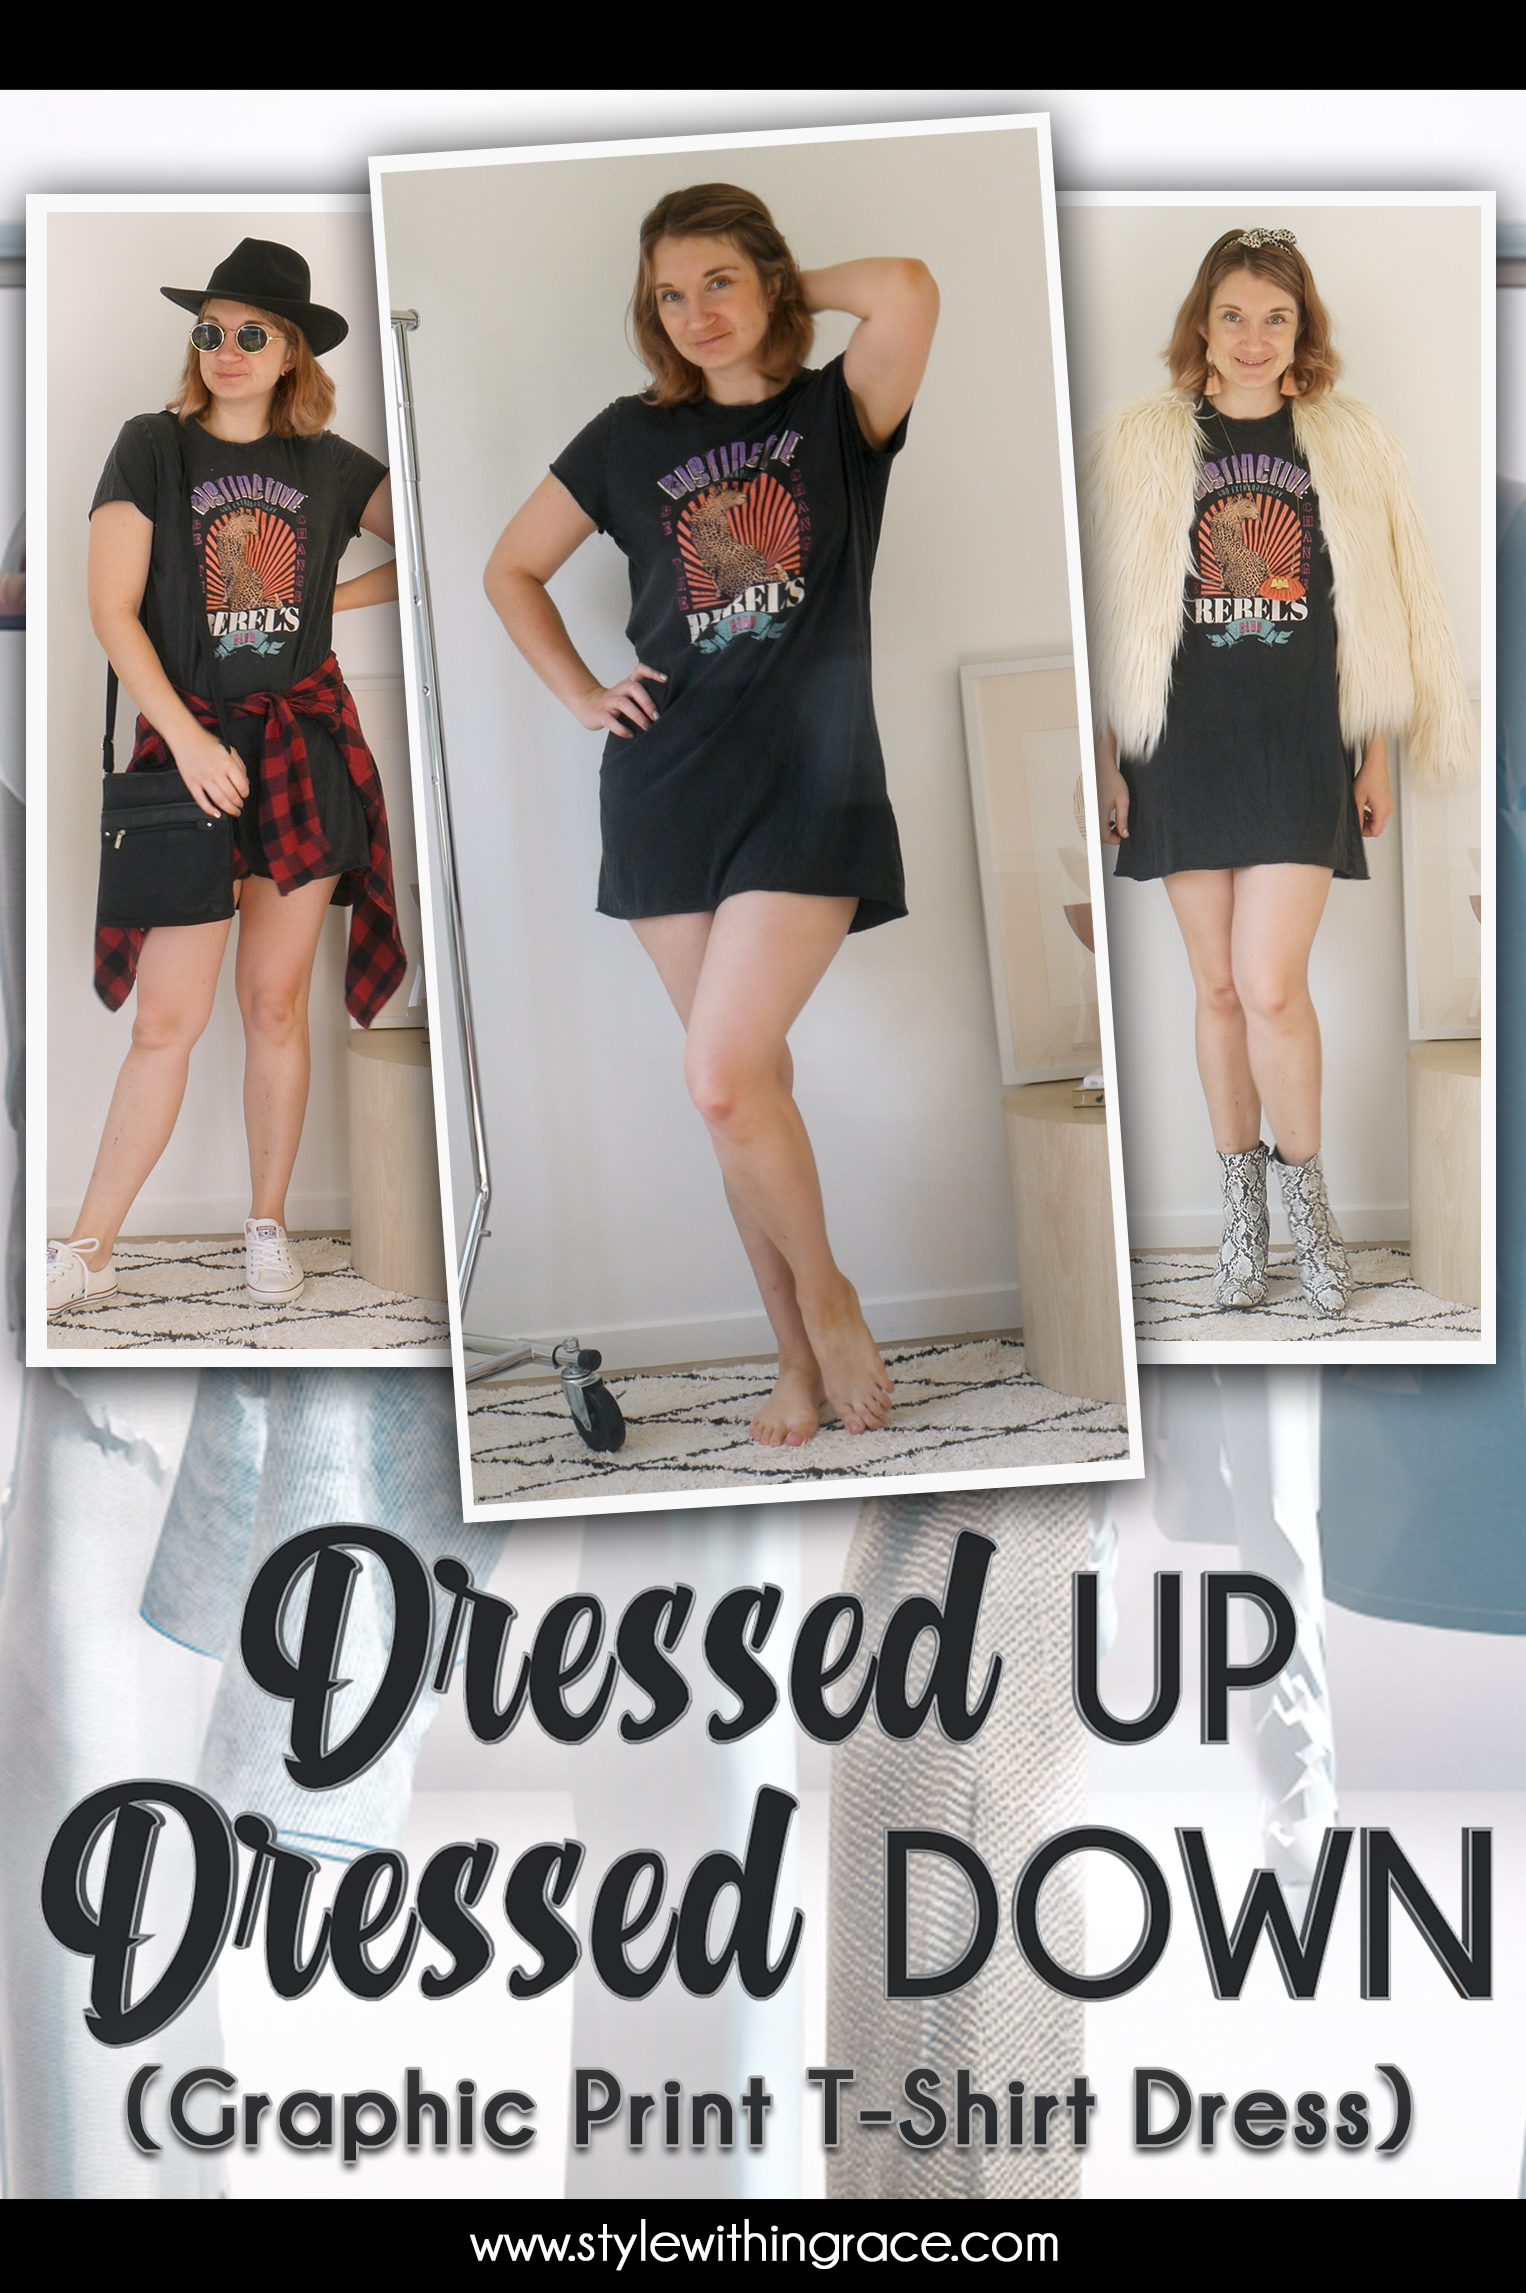 Dressed Up Dressed Down (Graphic Print T-shirt Dress) Pinterest